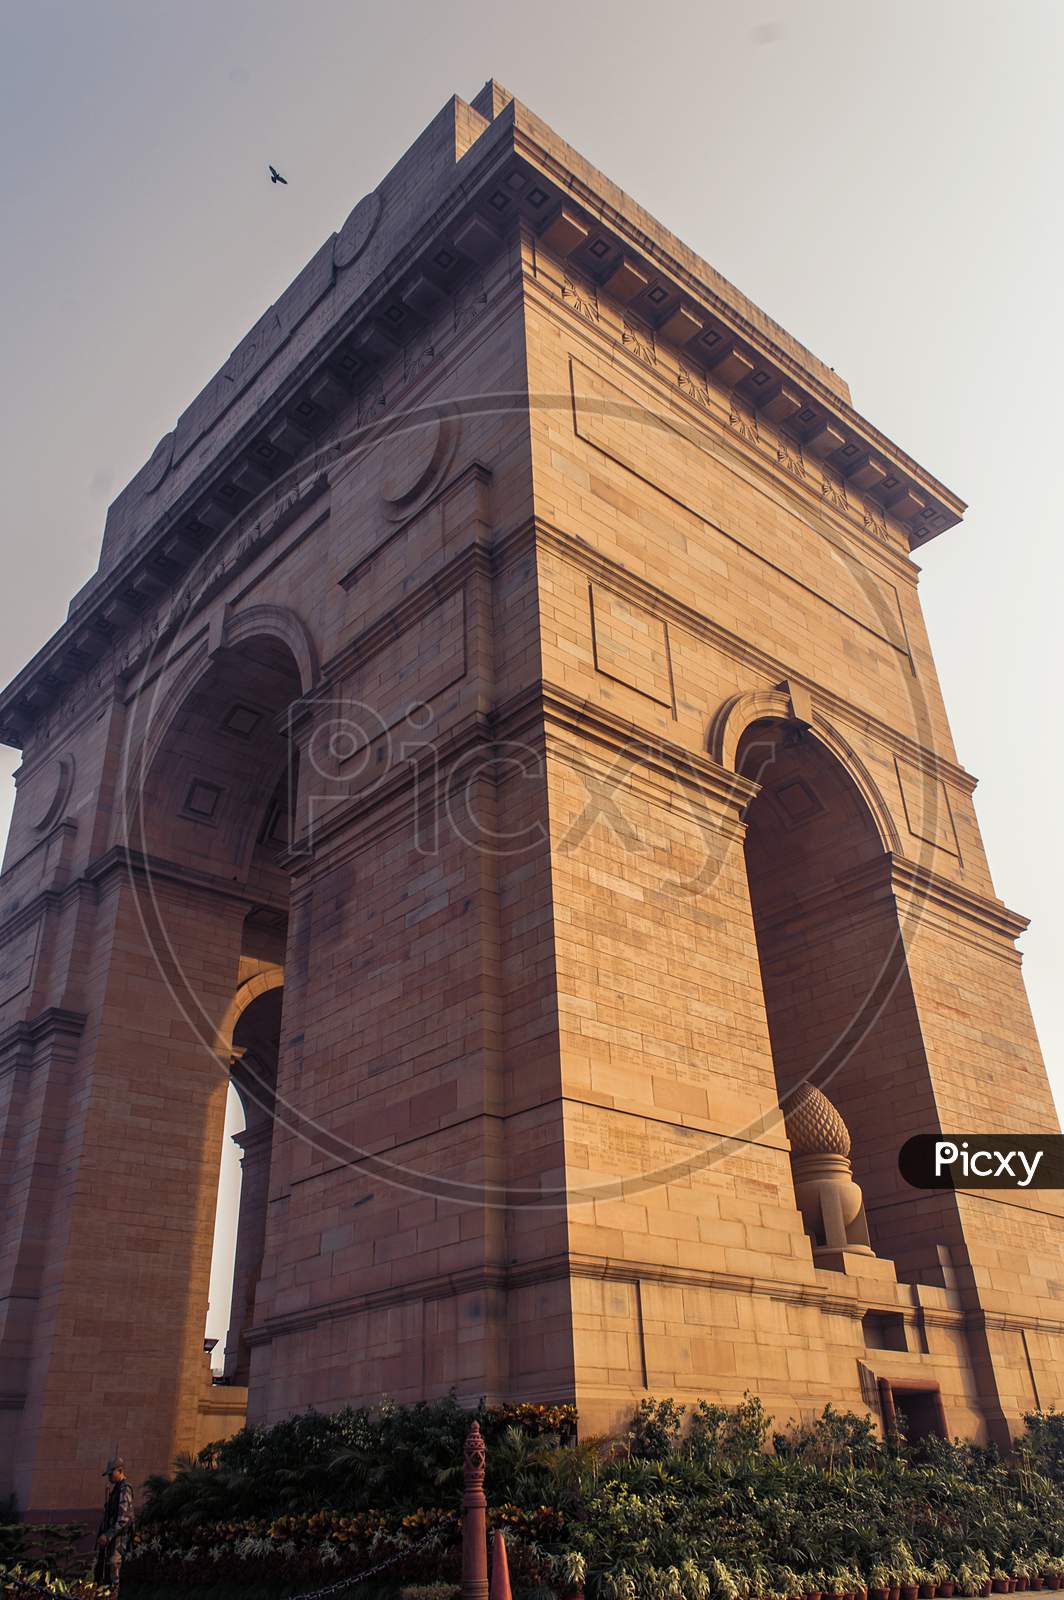 Architecture of Delhi, India Gate in India